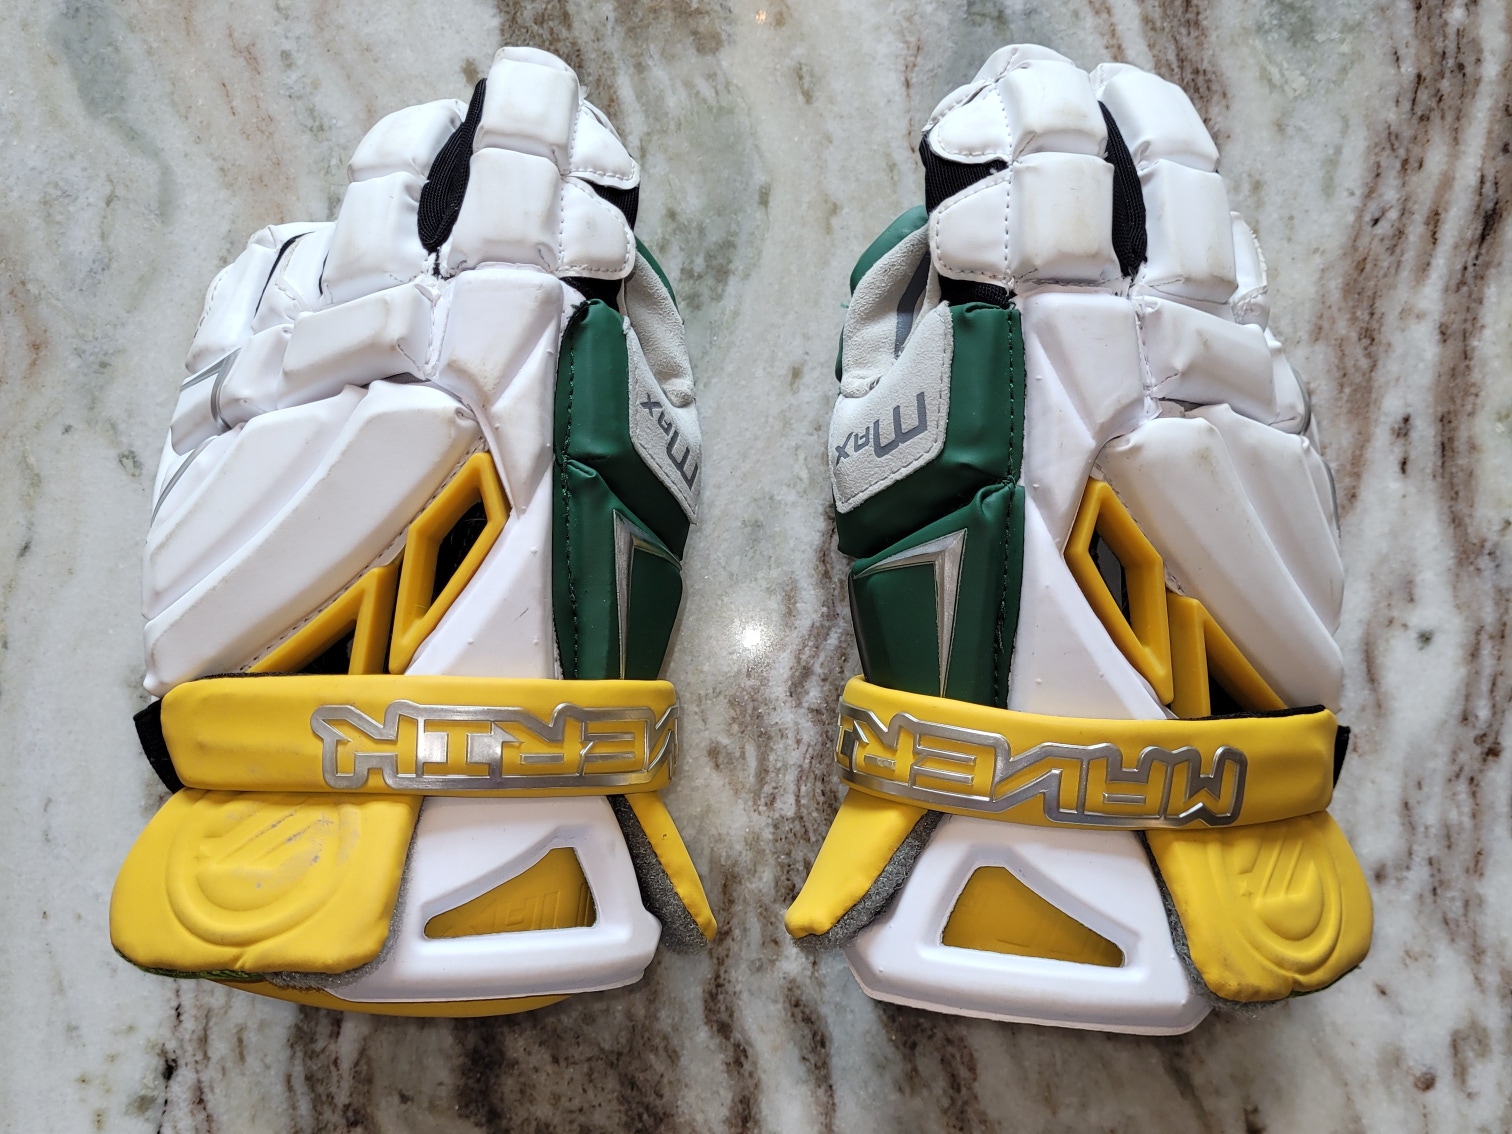 Used Player's Maverik Max Lacrosse Gloves 12"